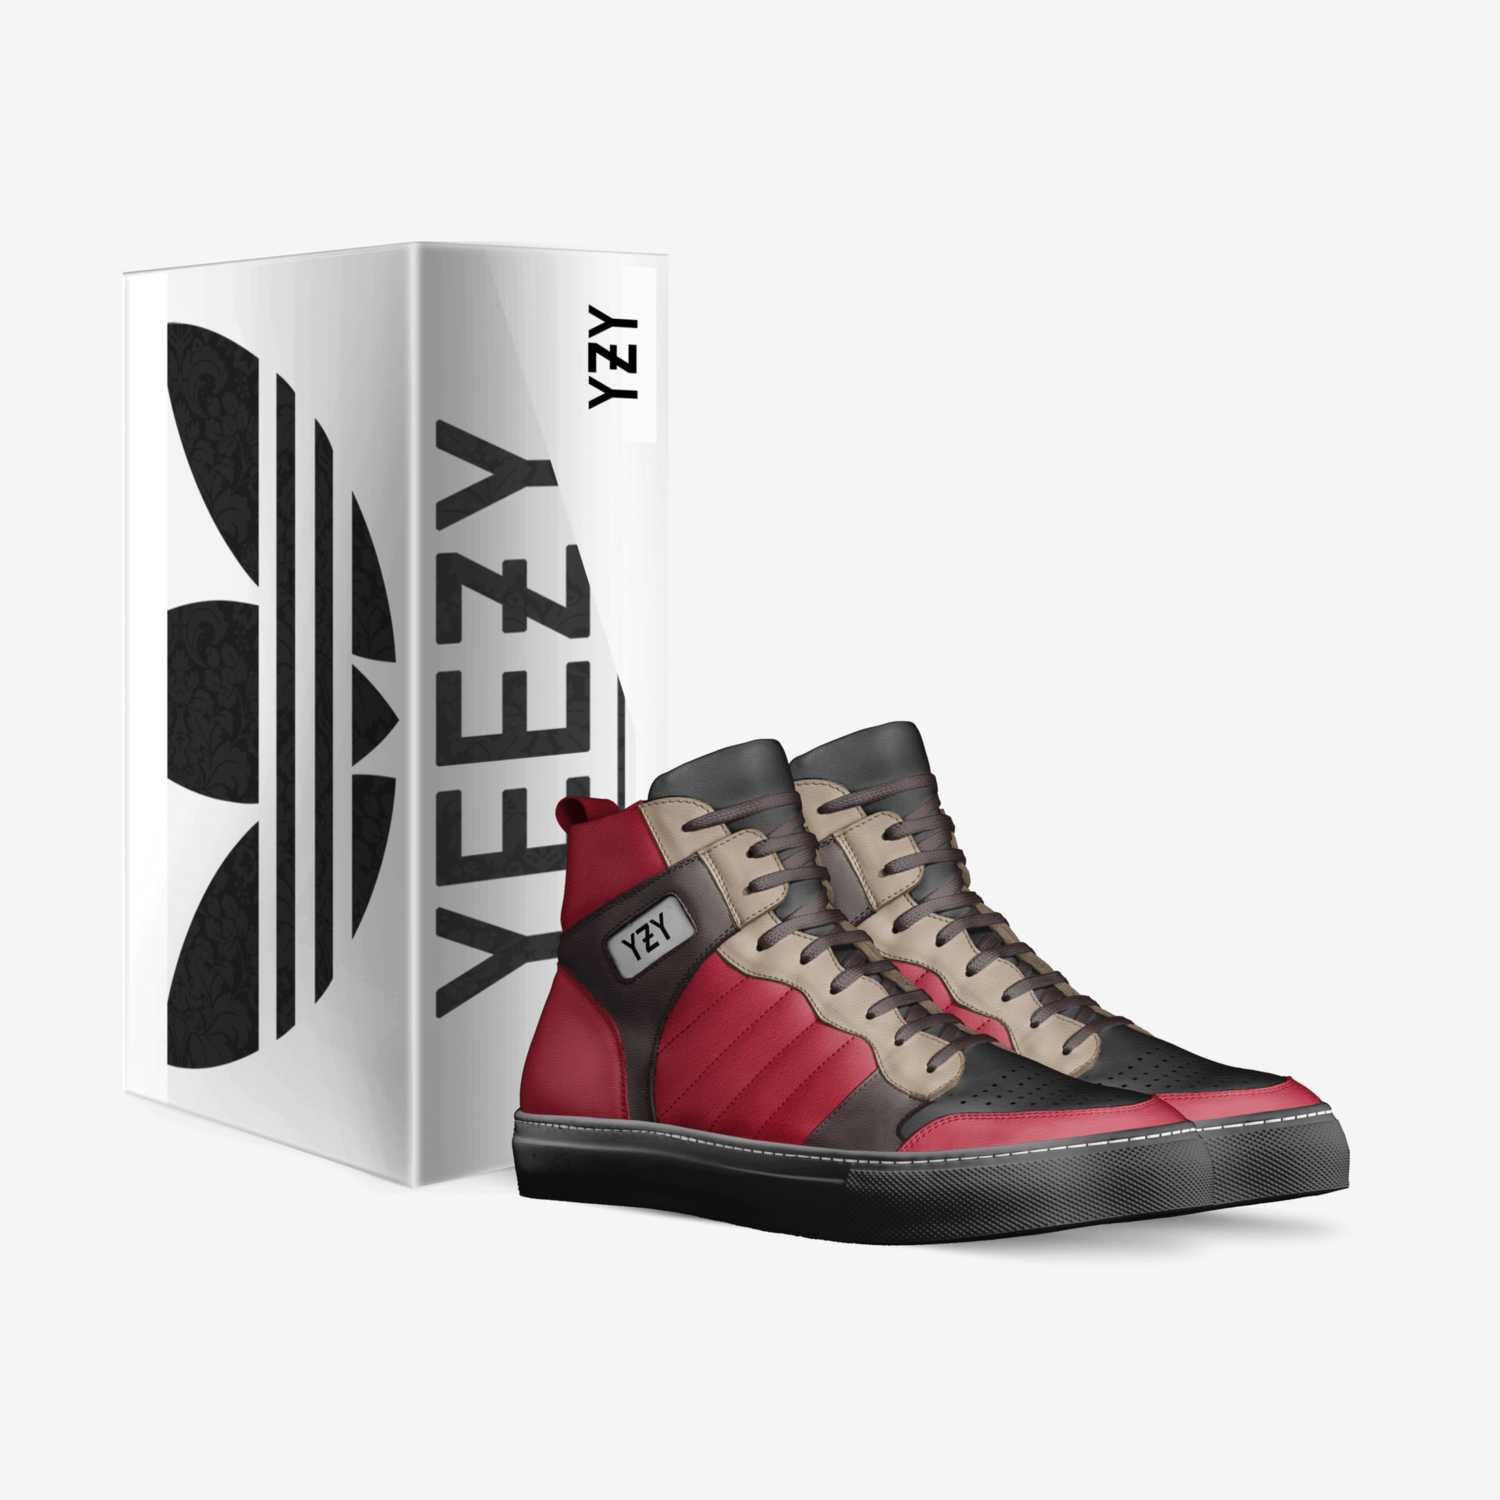 yezzy 2.0 custom made in Italy shoes by Emi Shamilov | Box view